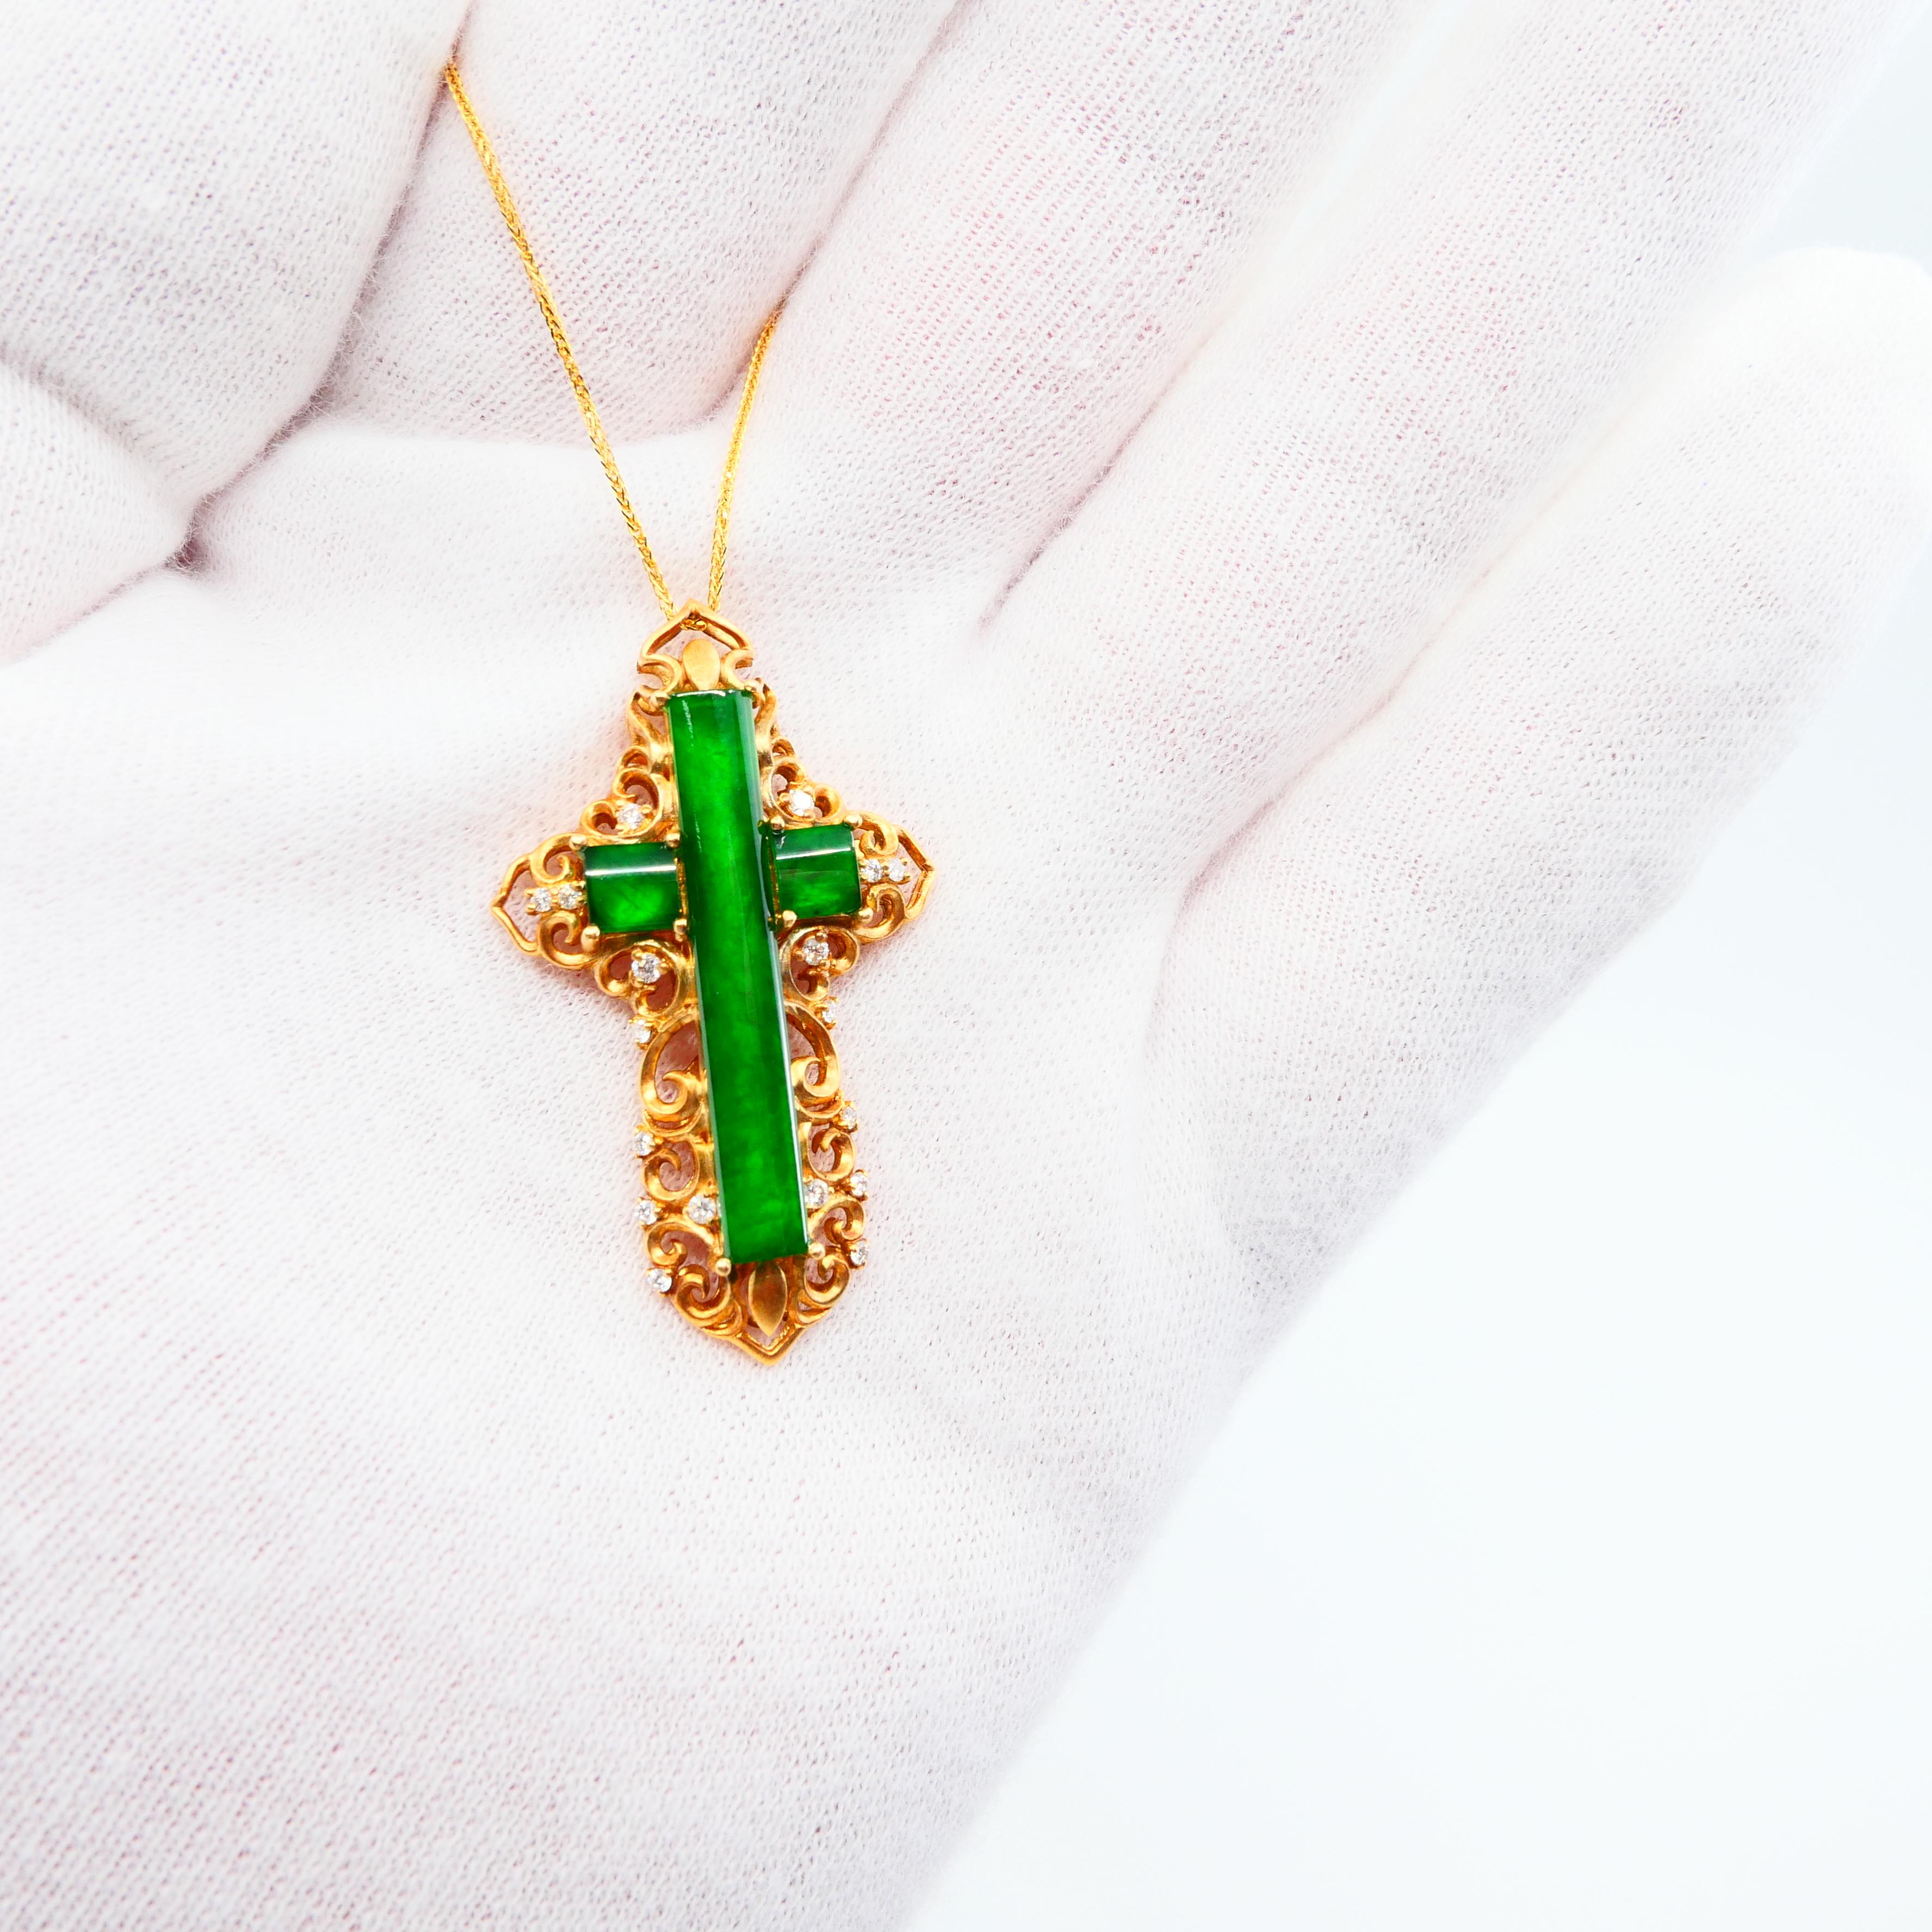 Certified Type A Jade Diamond Cross Pendant Drop Necklace, Intense Vivid Green 3